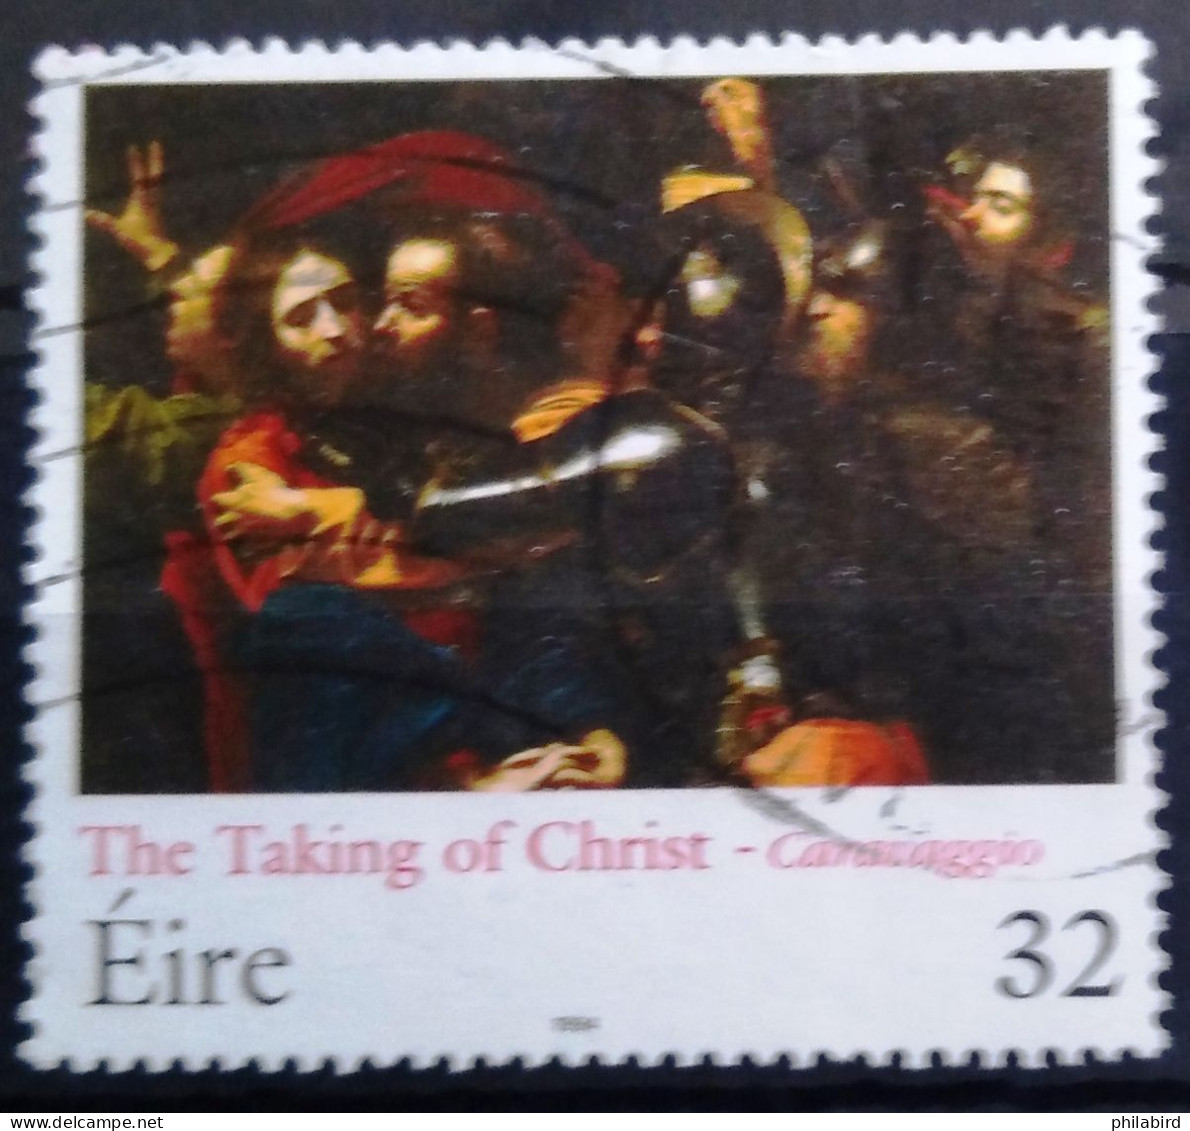 IRLANDE                       N° 855                    OBLITERE - Used Stamps